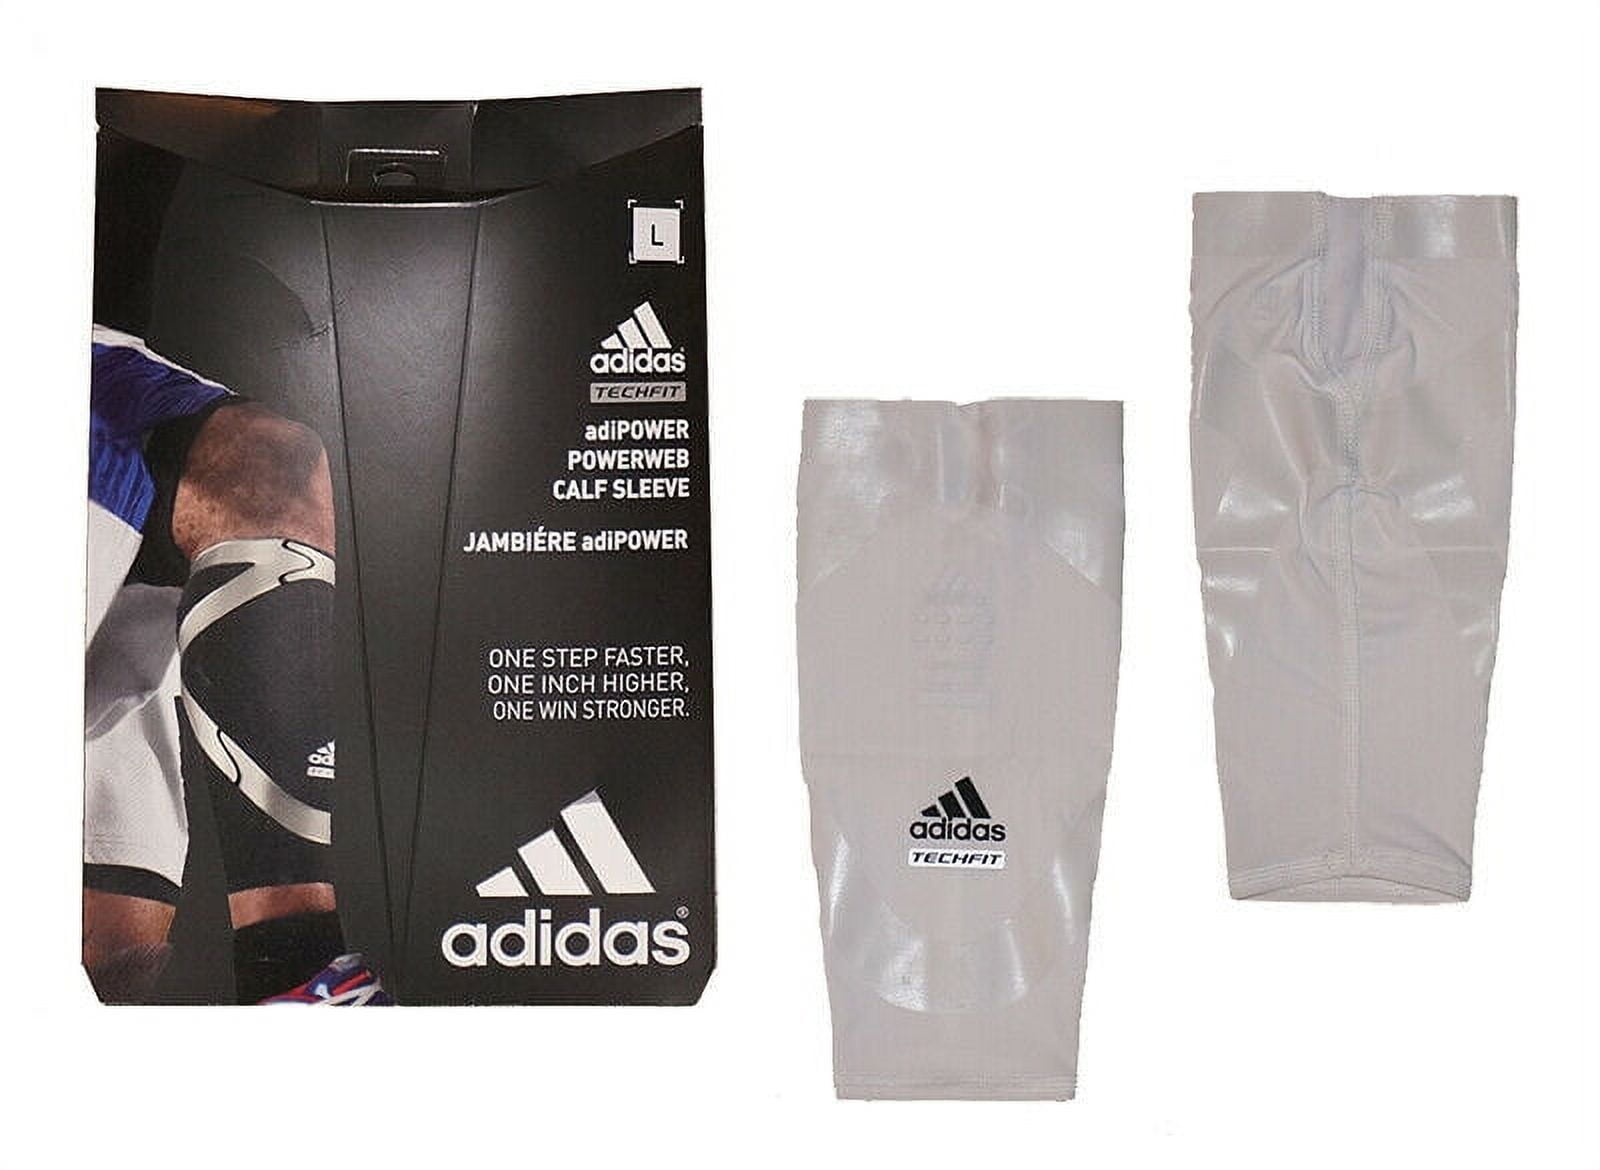 Adidas Men's Techfit Basketball Powerweb Compression Calf Sleeve - White 